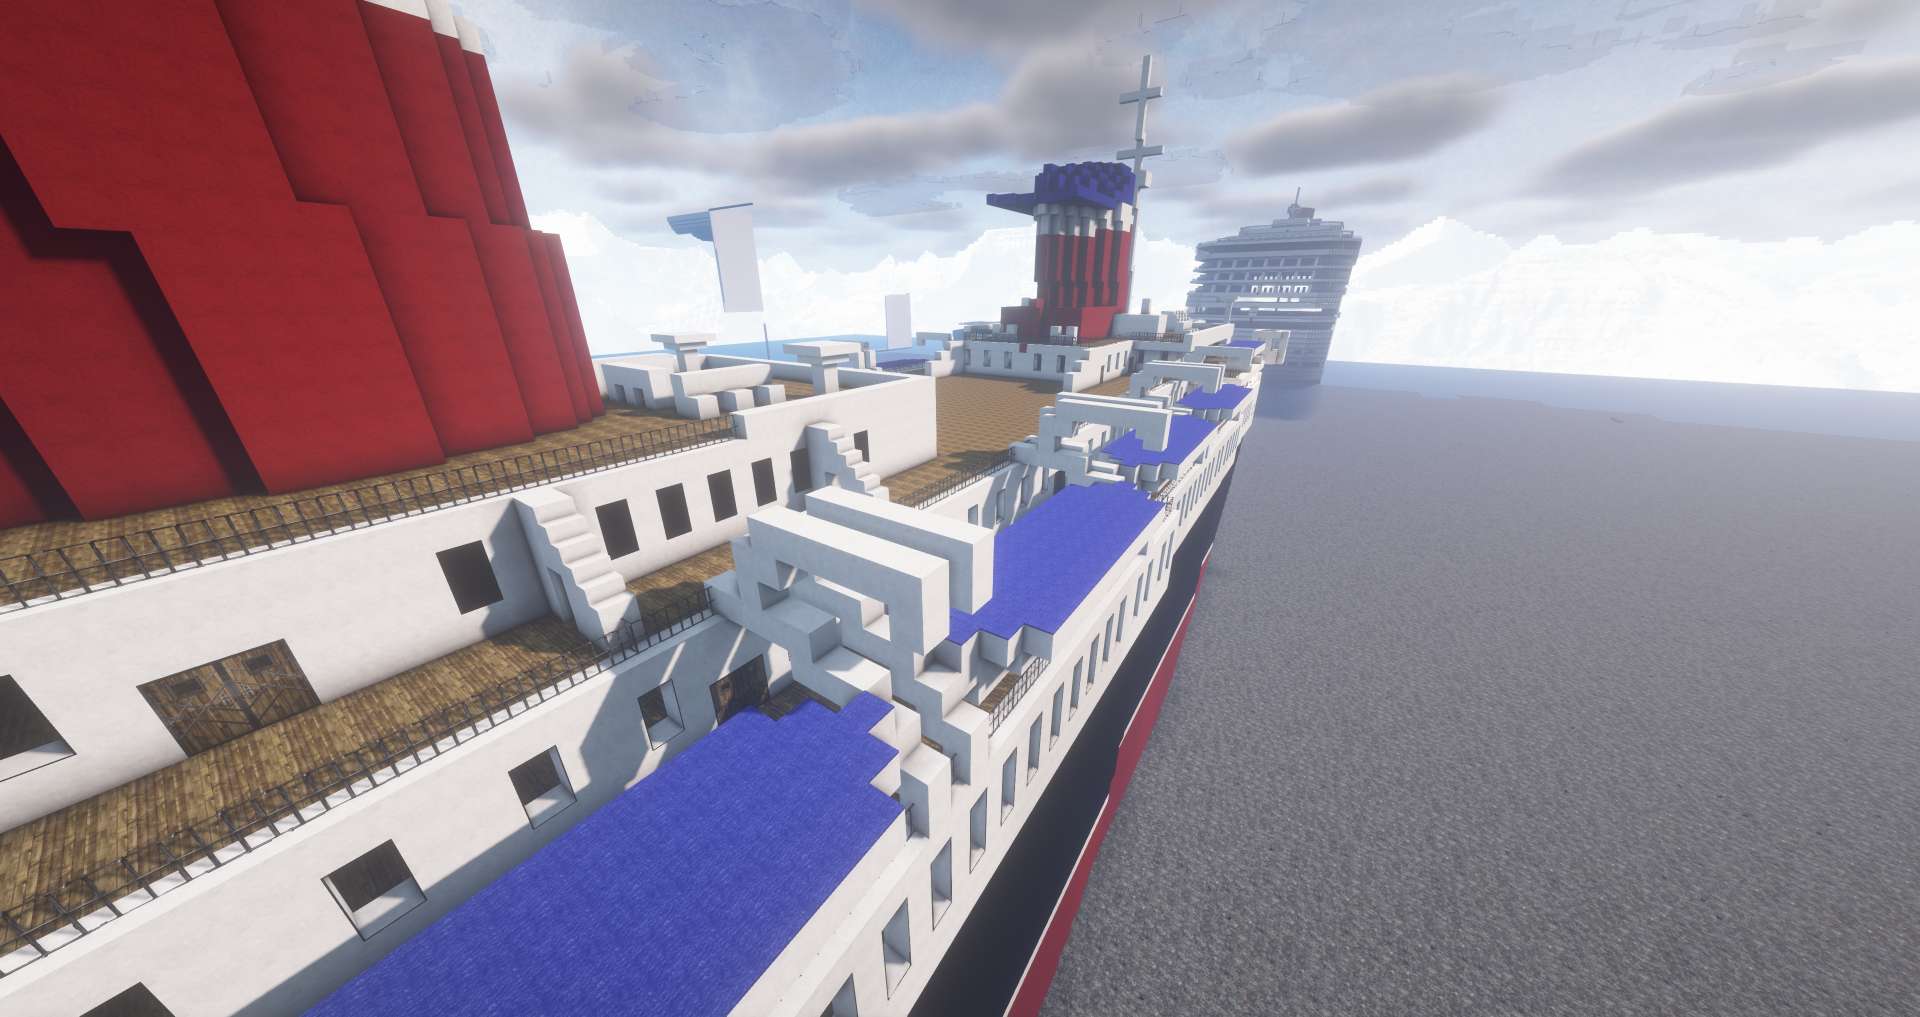 SS America ship built in Minecraft